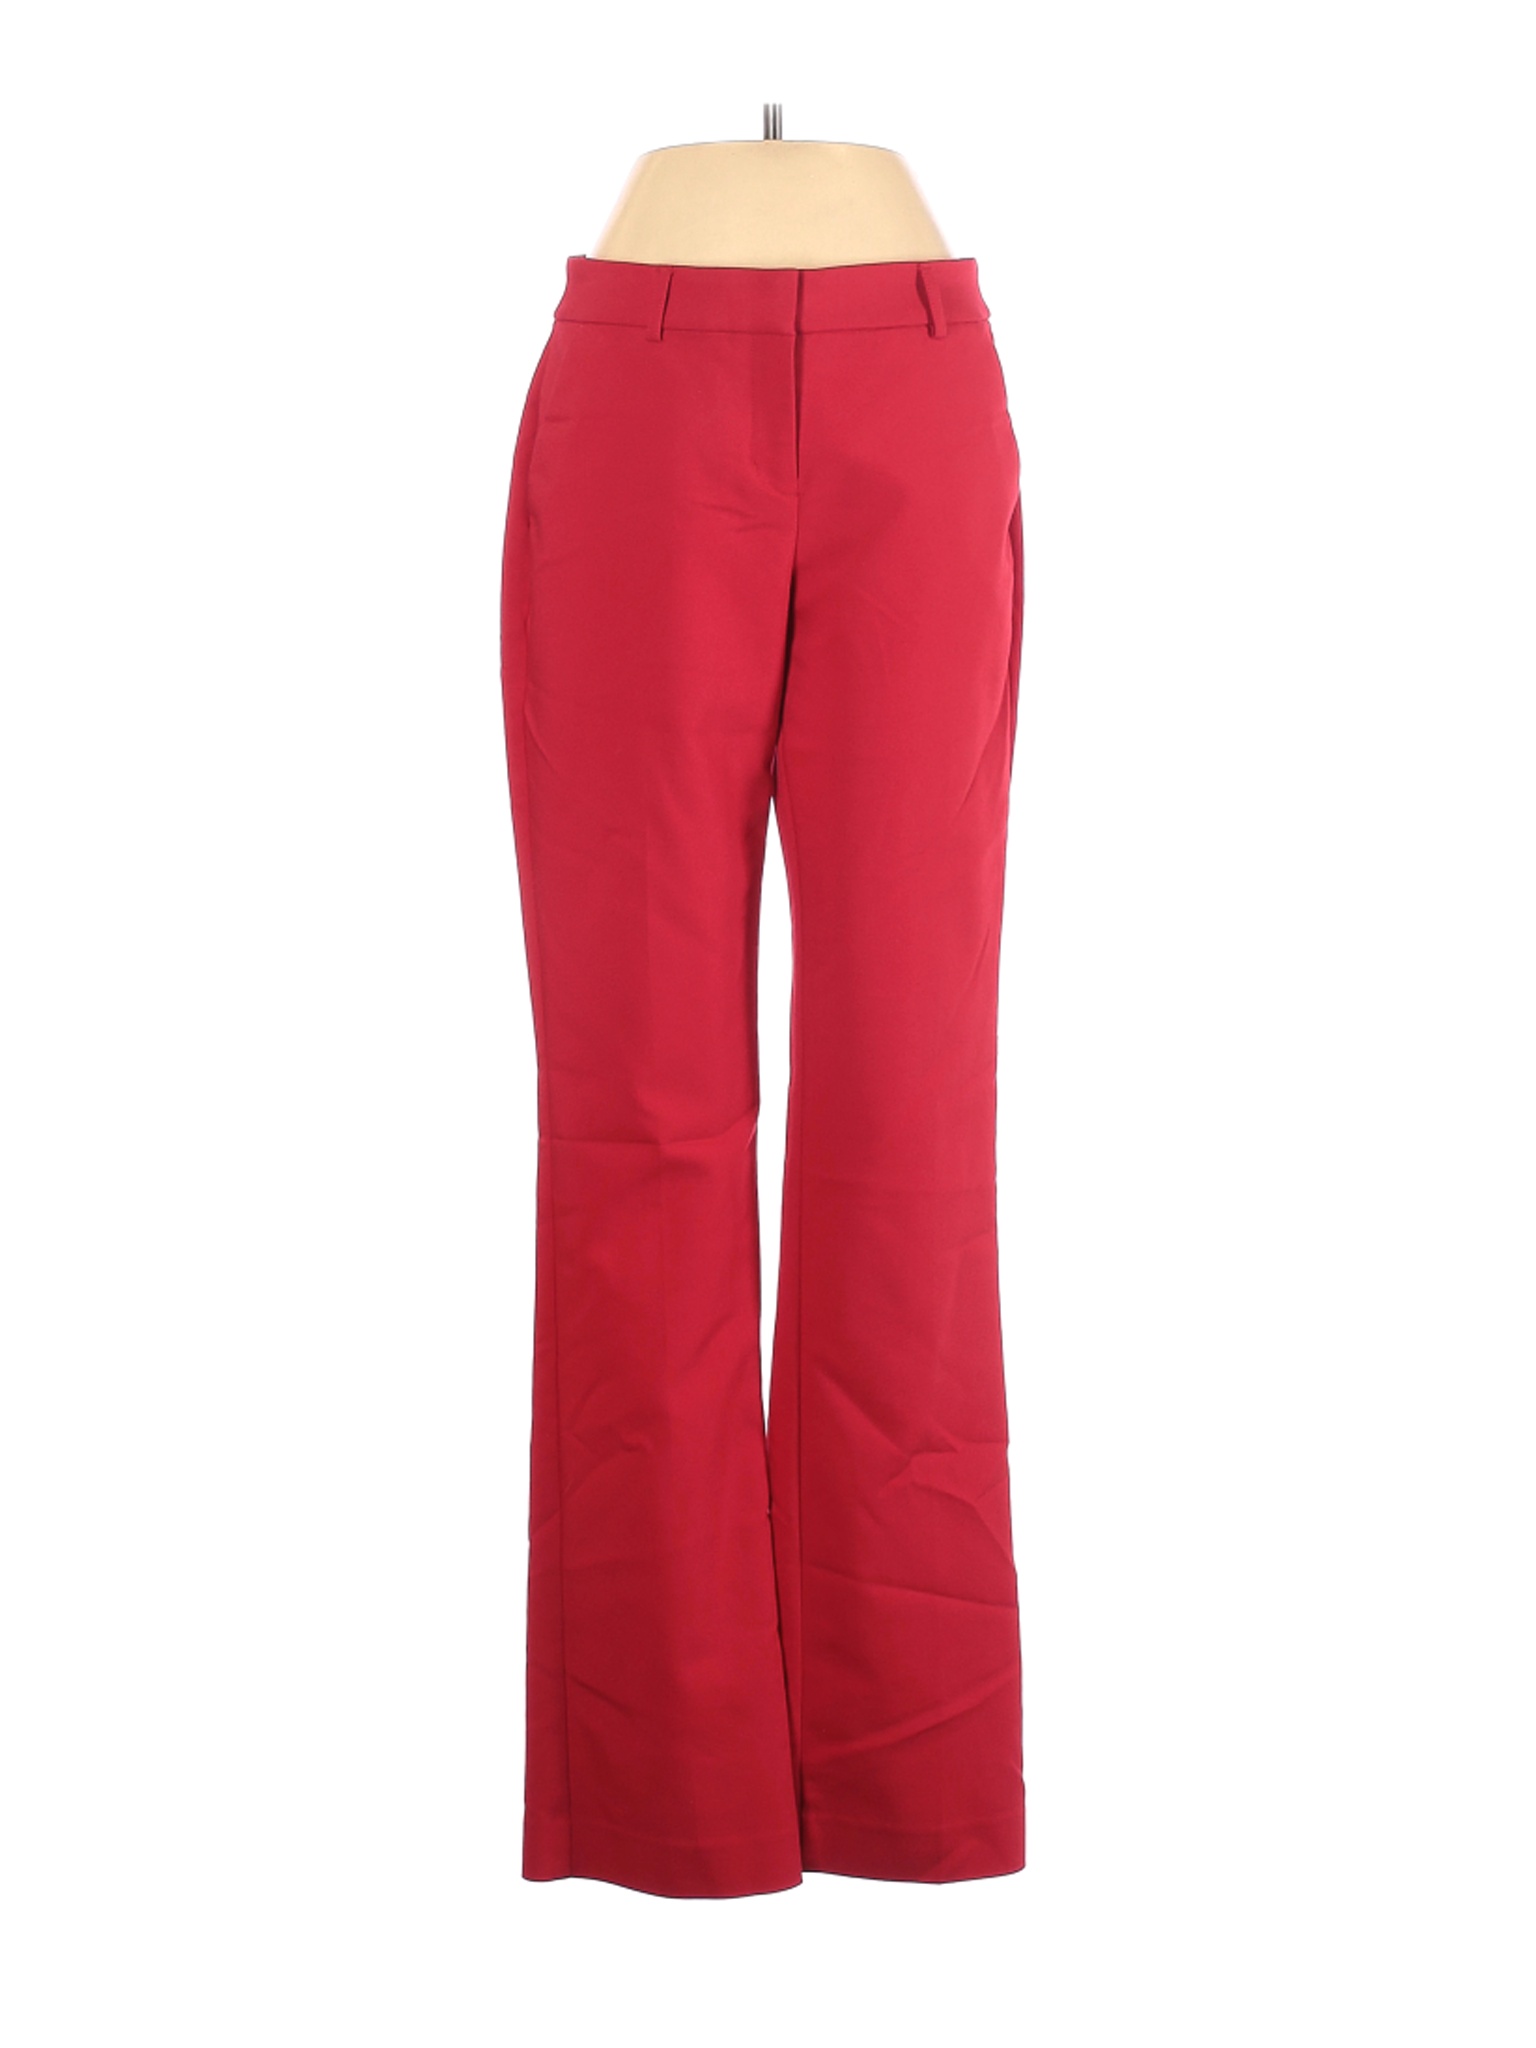 Express Women Red Dress Pants 2 | eBay